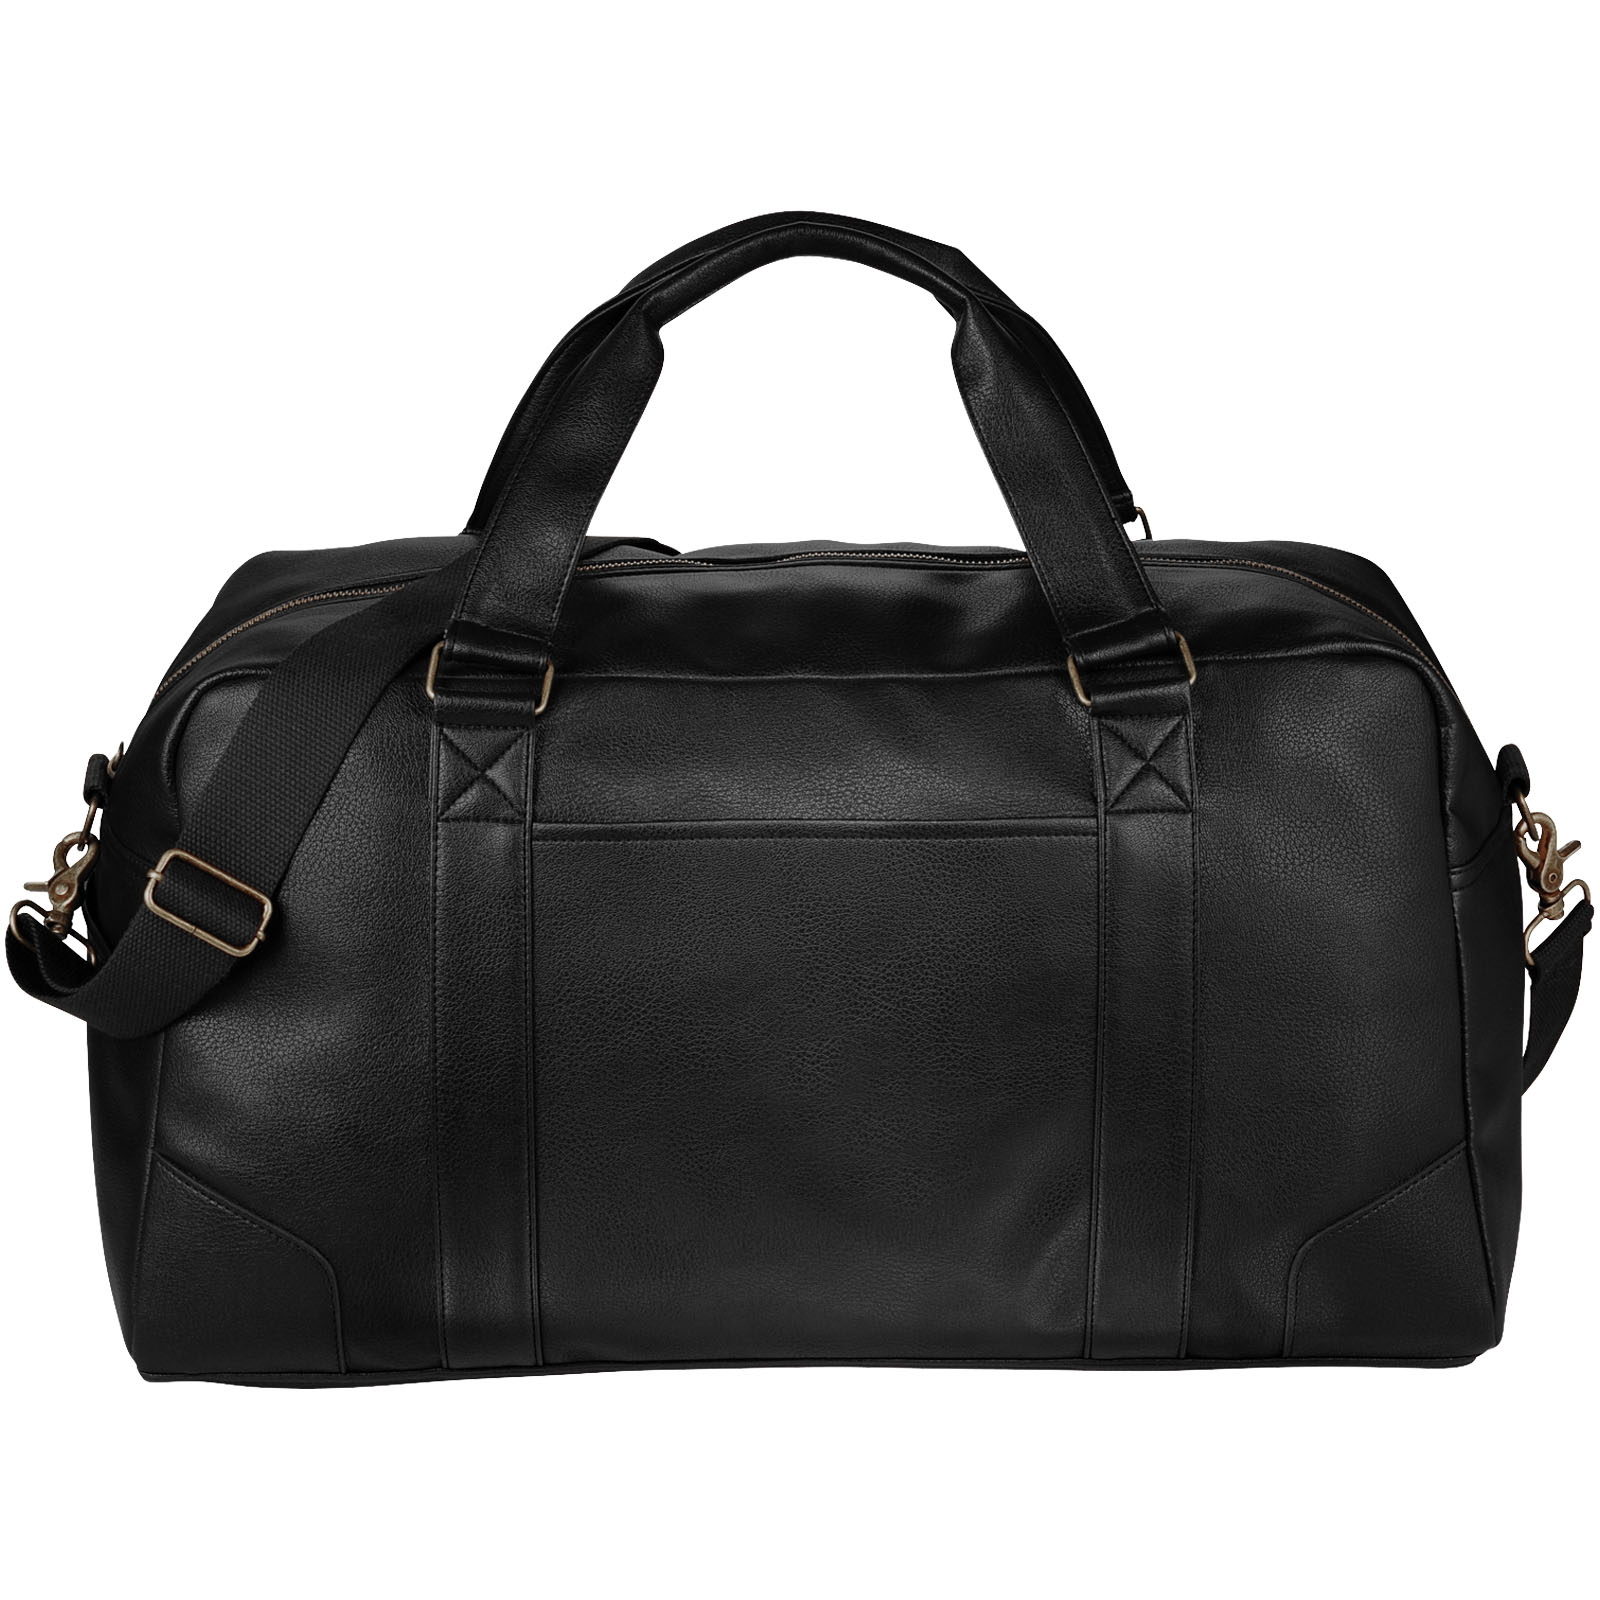 Advertising Travel bags - Oxford weekend travel duffel bag 25L - 1